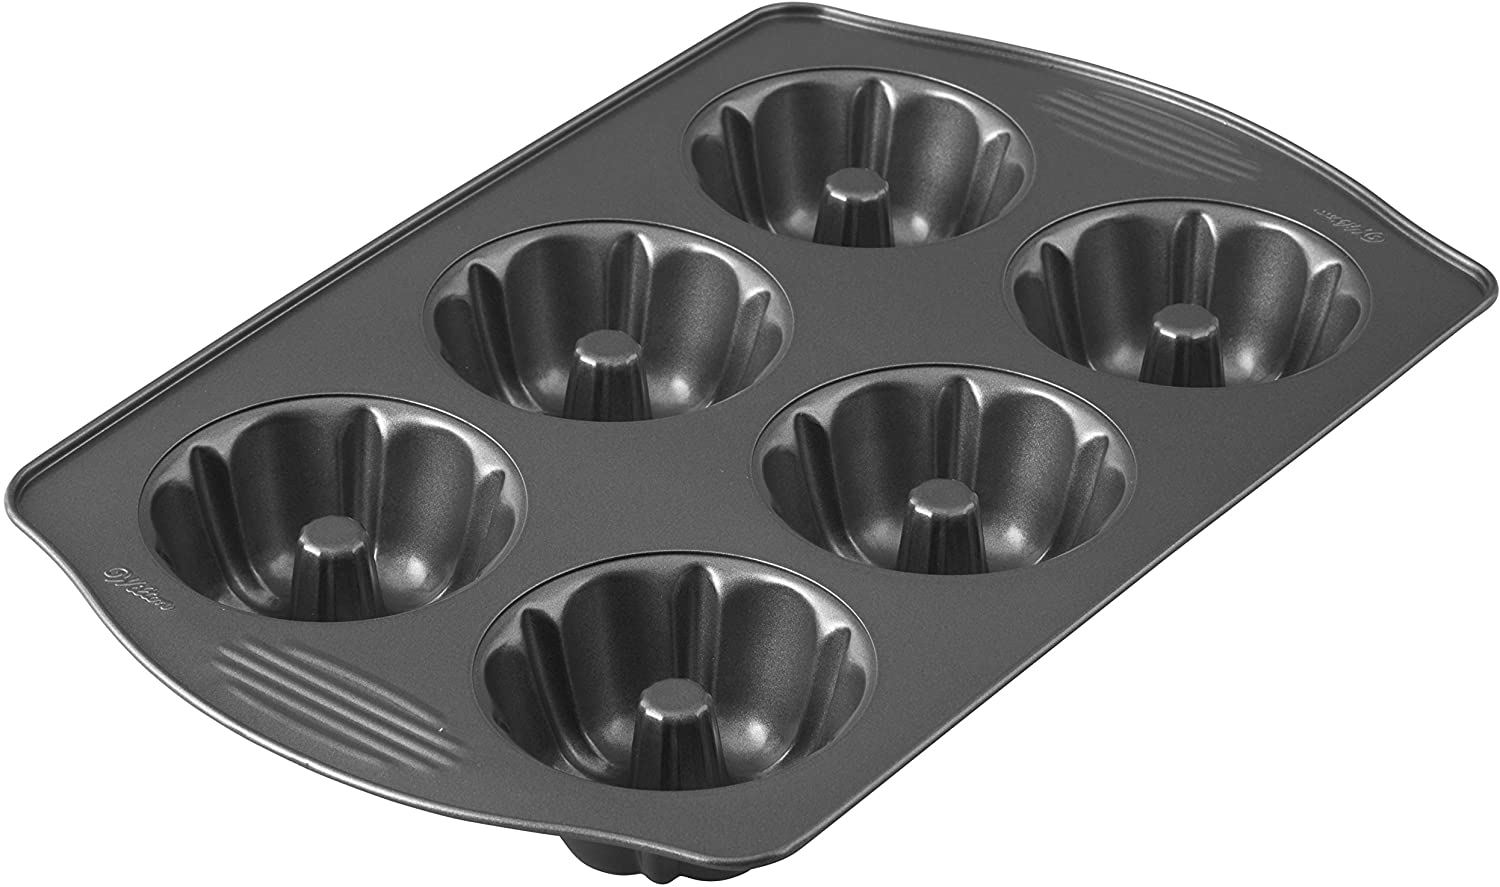 Nordic Ware Commercial Original Bundt Muffin Pan with Premium Non-Stick Coating 6-Cavity